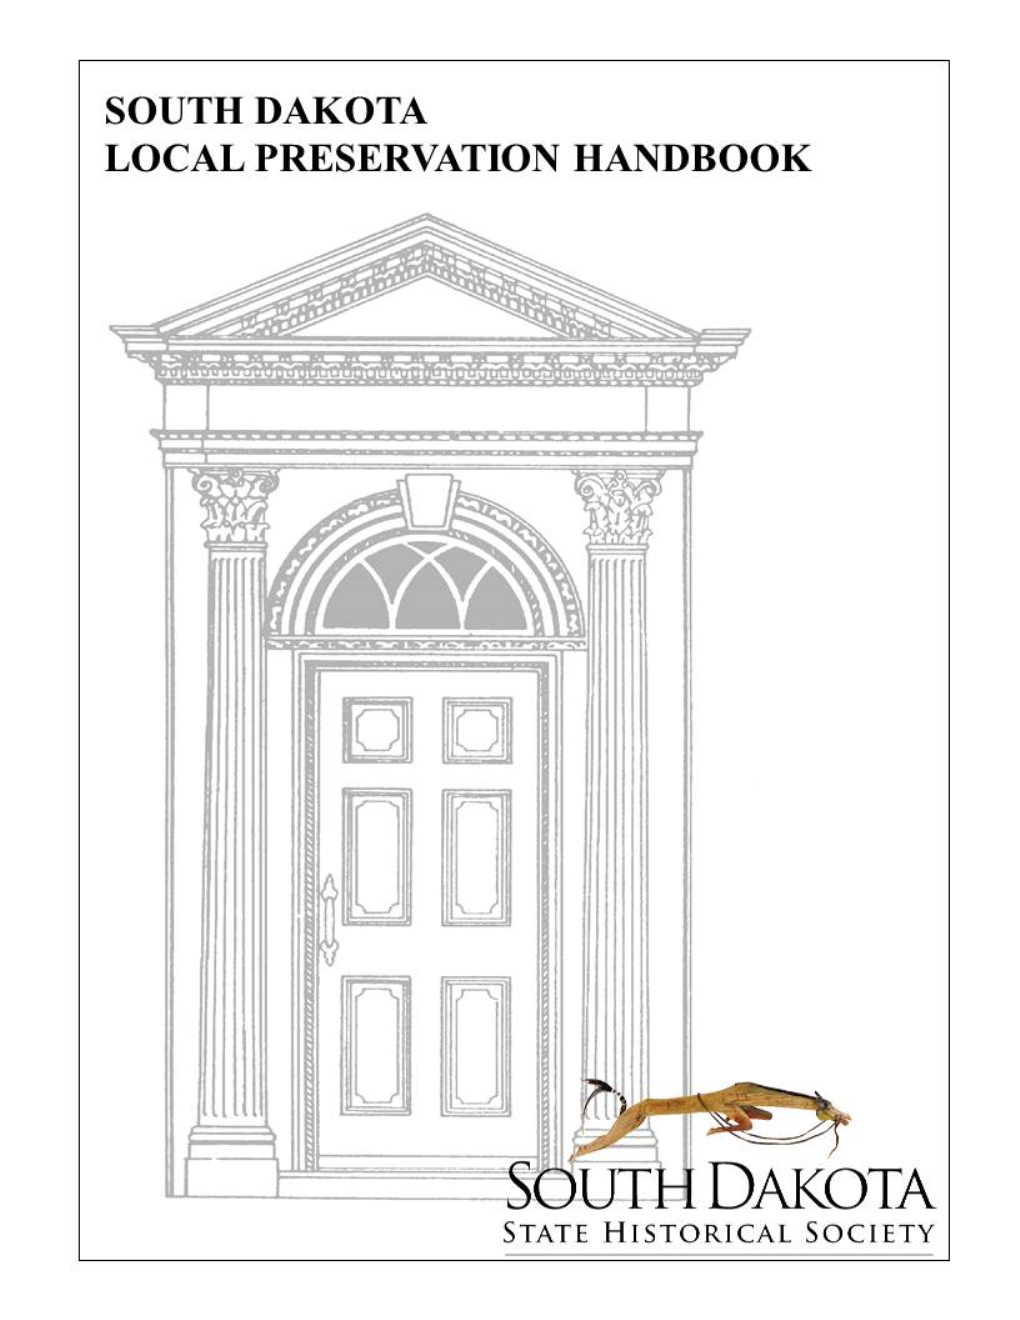 Local Preservation Handbook